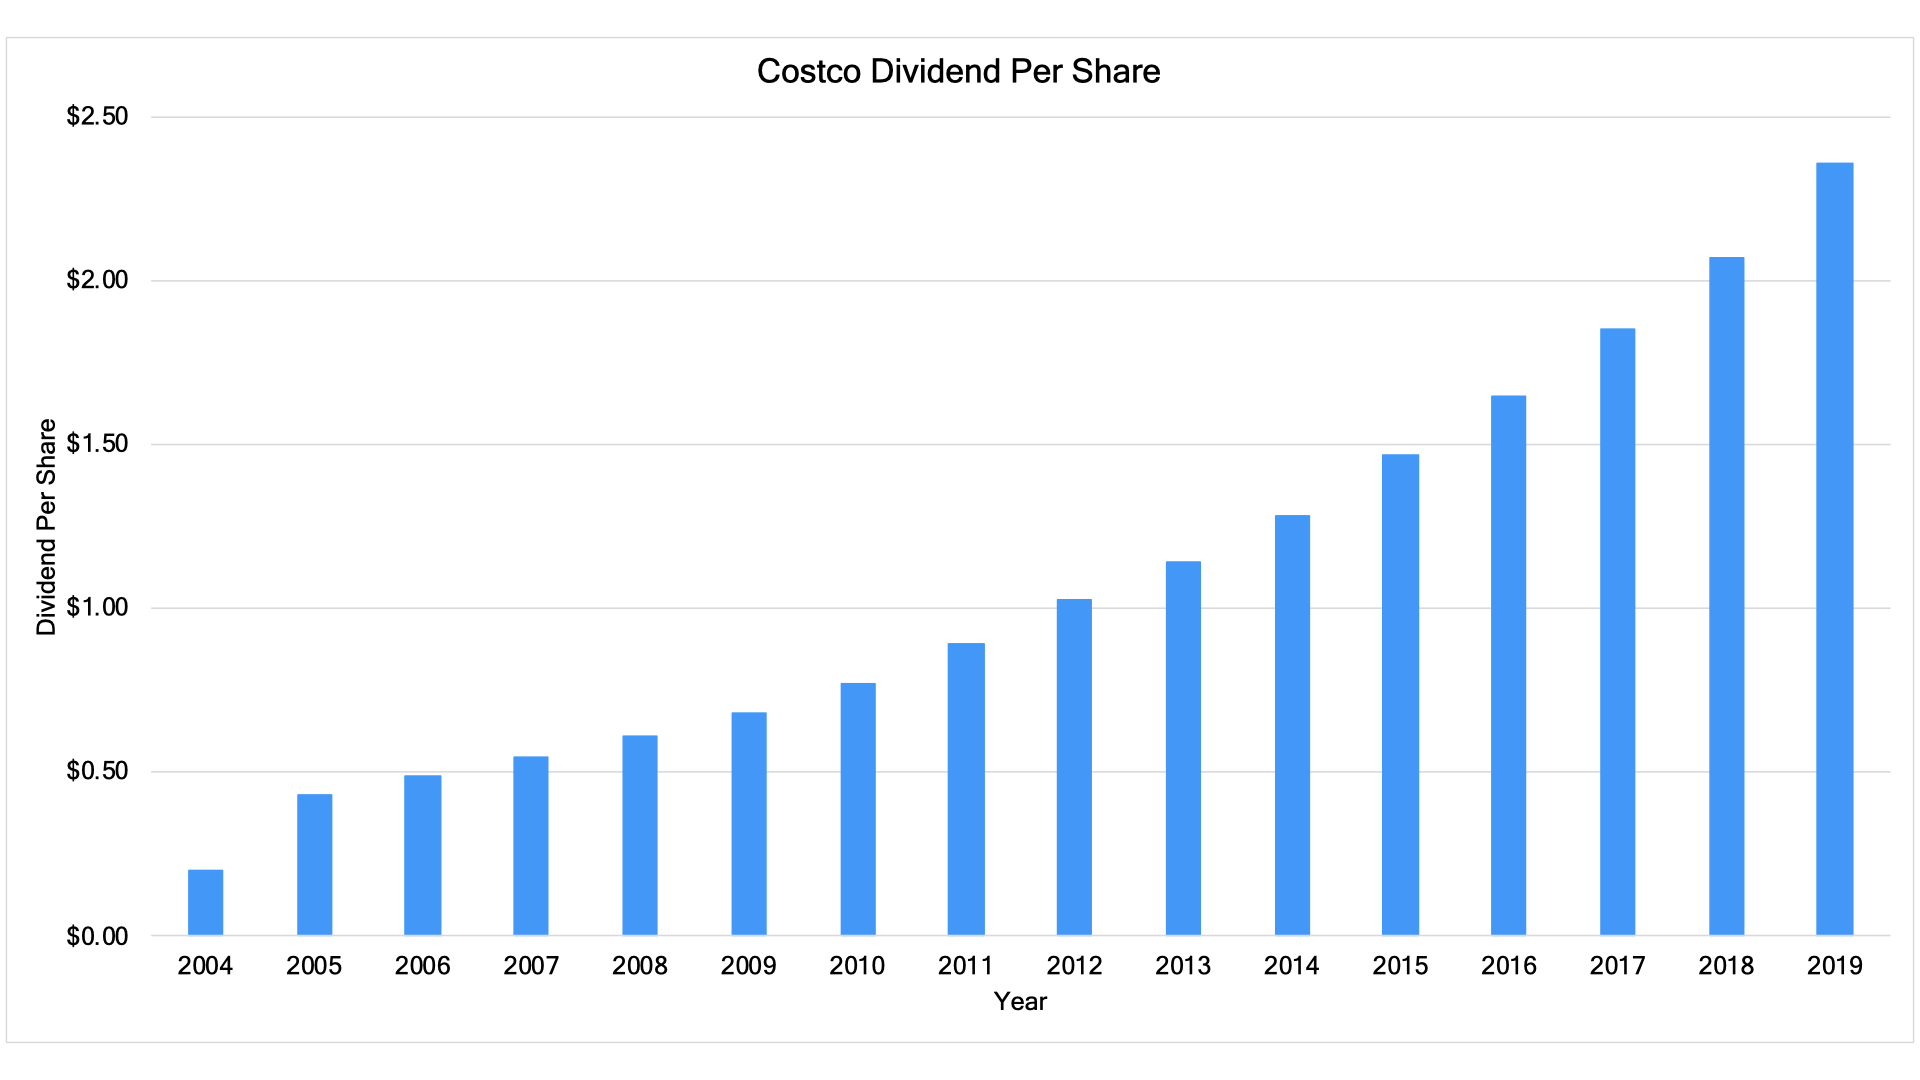 graph of costco dividend per share over time